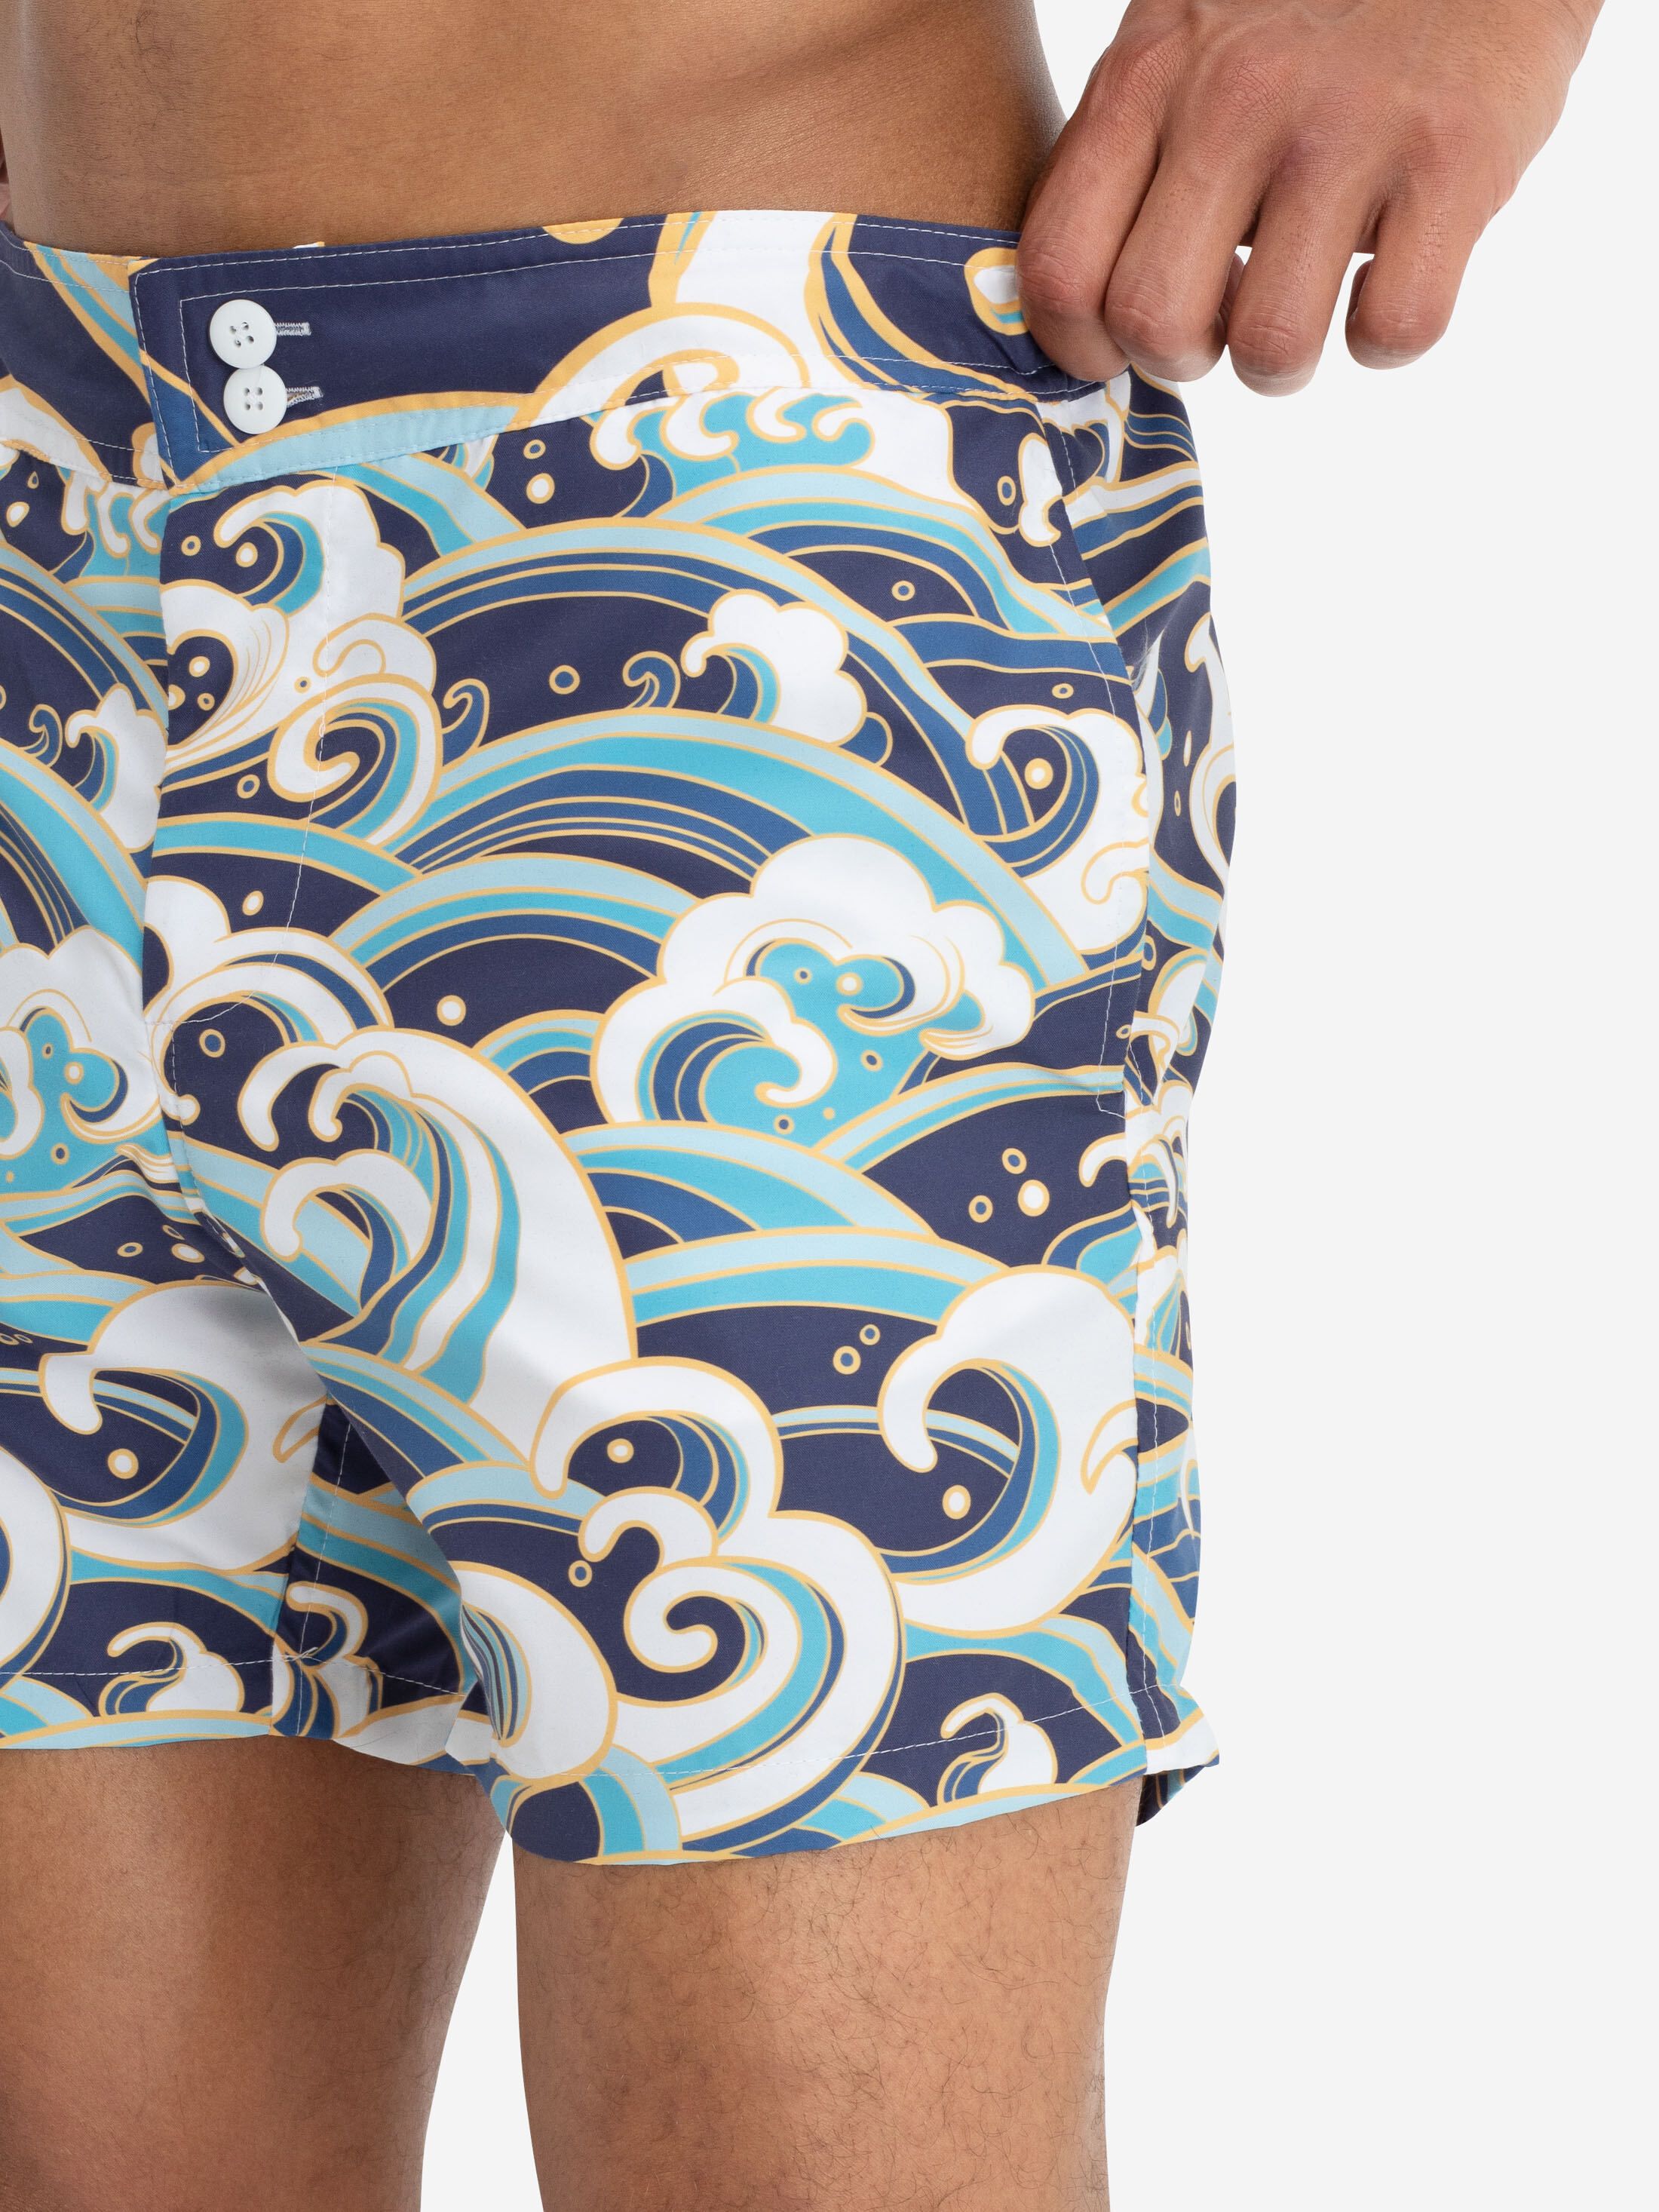 design your own quick dry shorts Australia